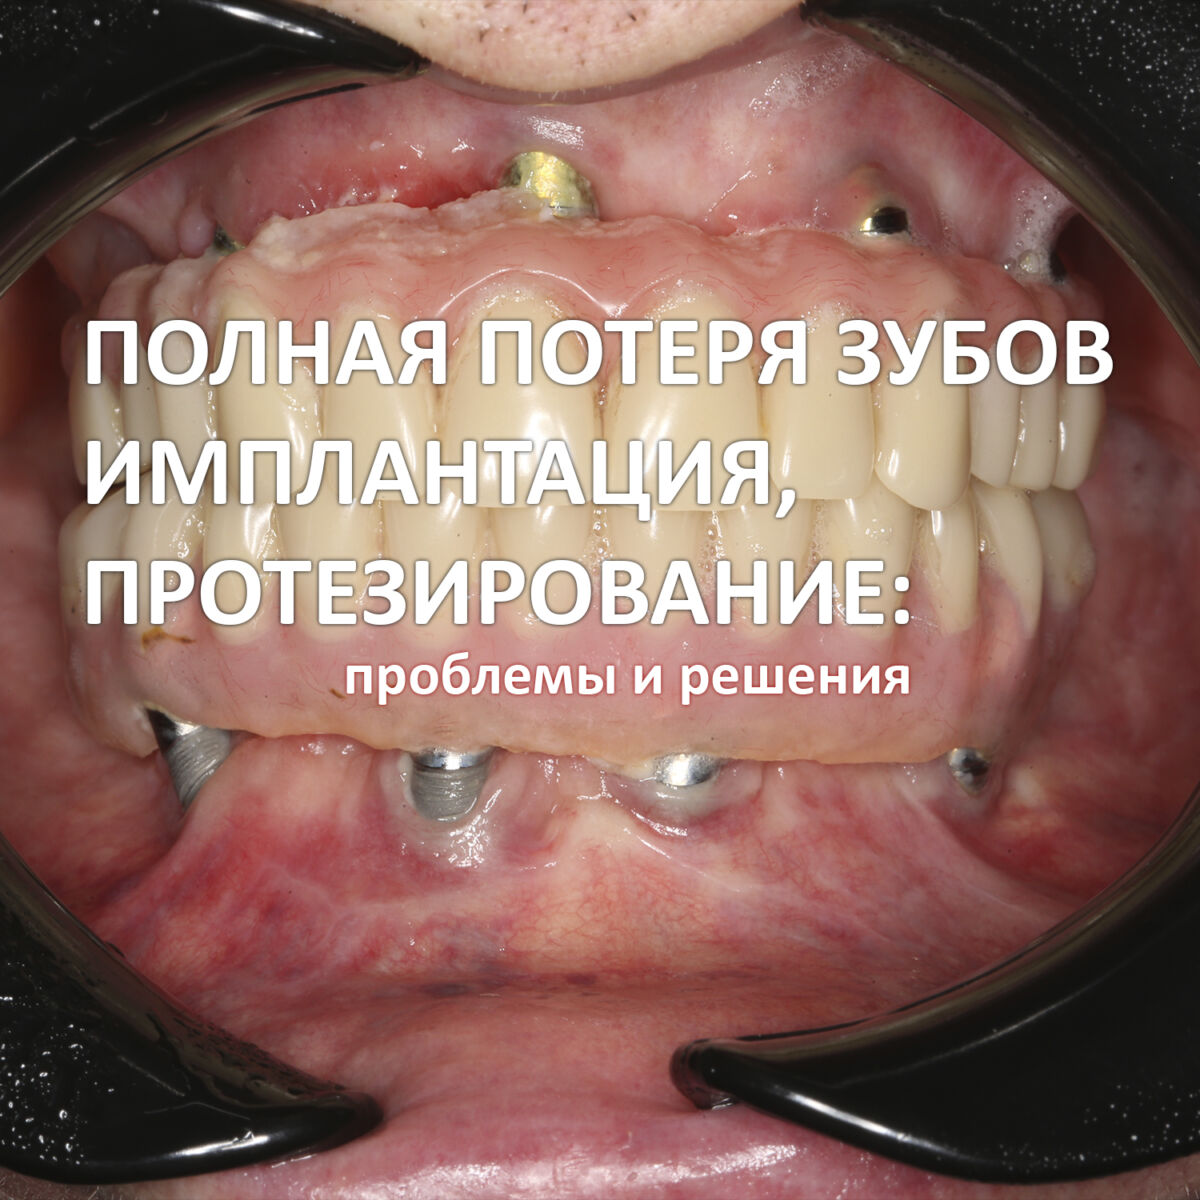 Лечение зубов, лечение кариеса